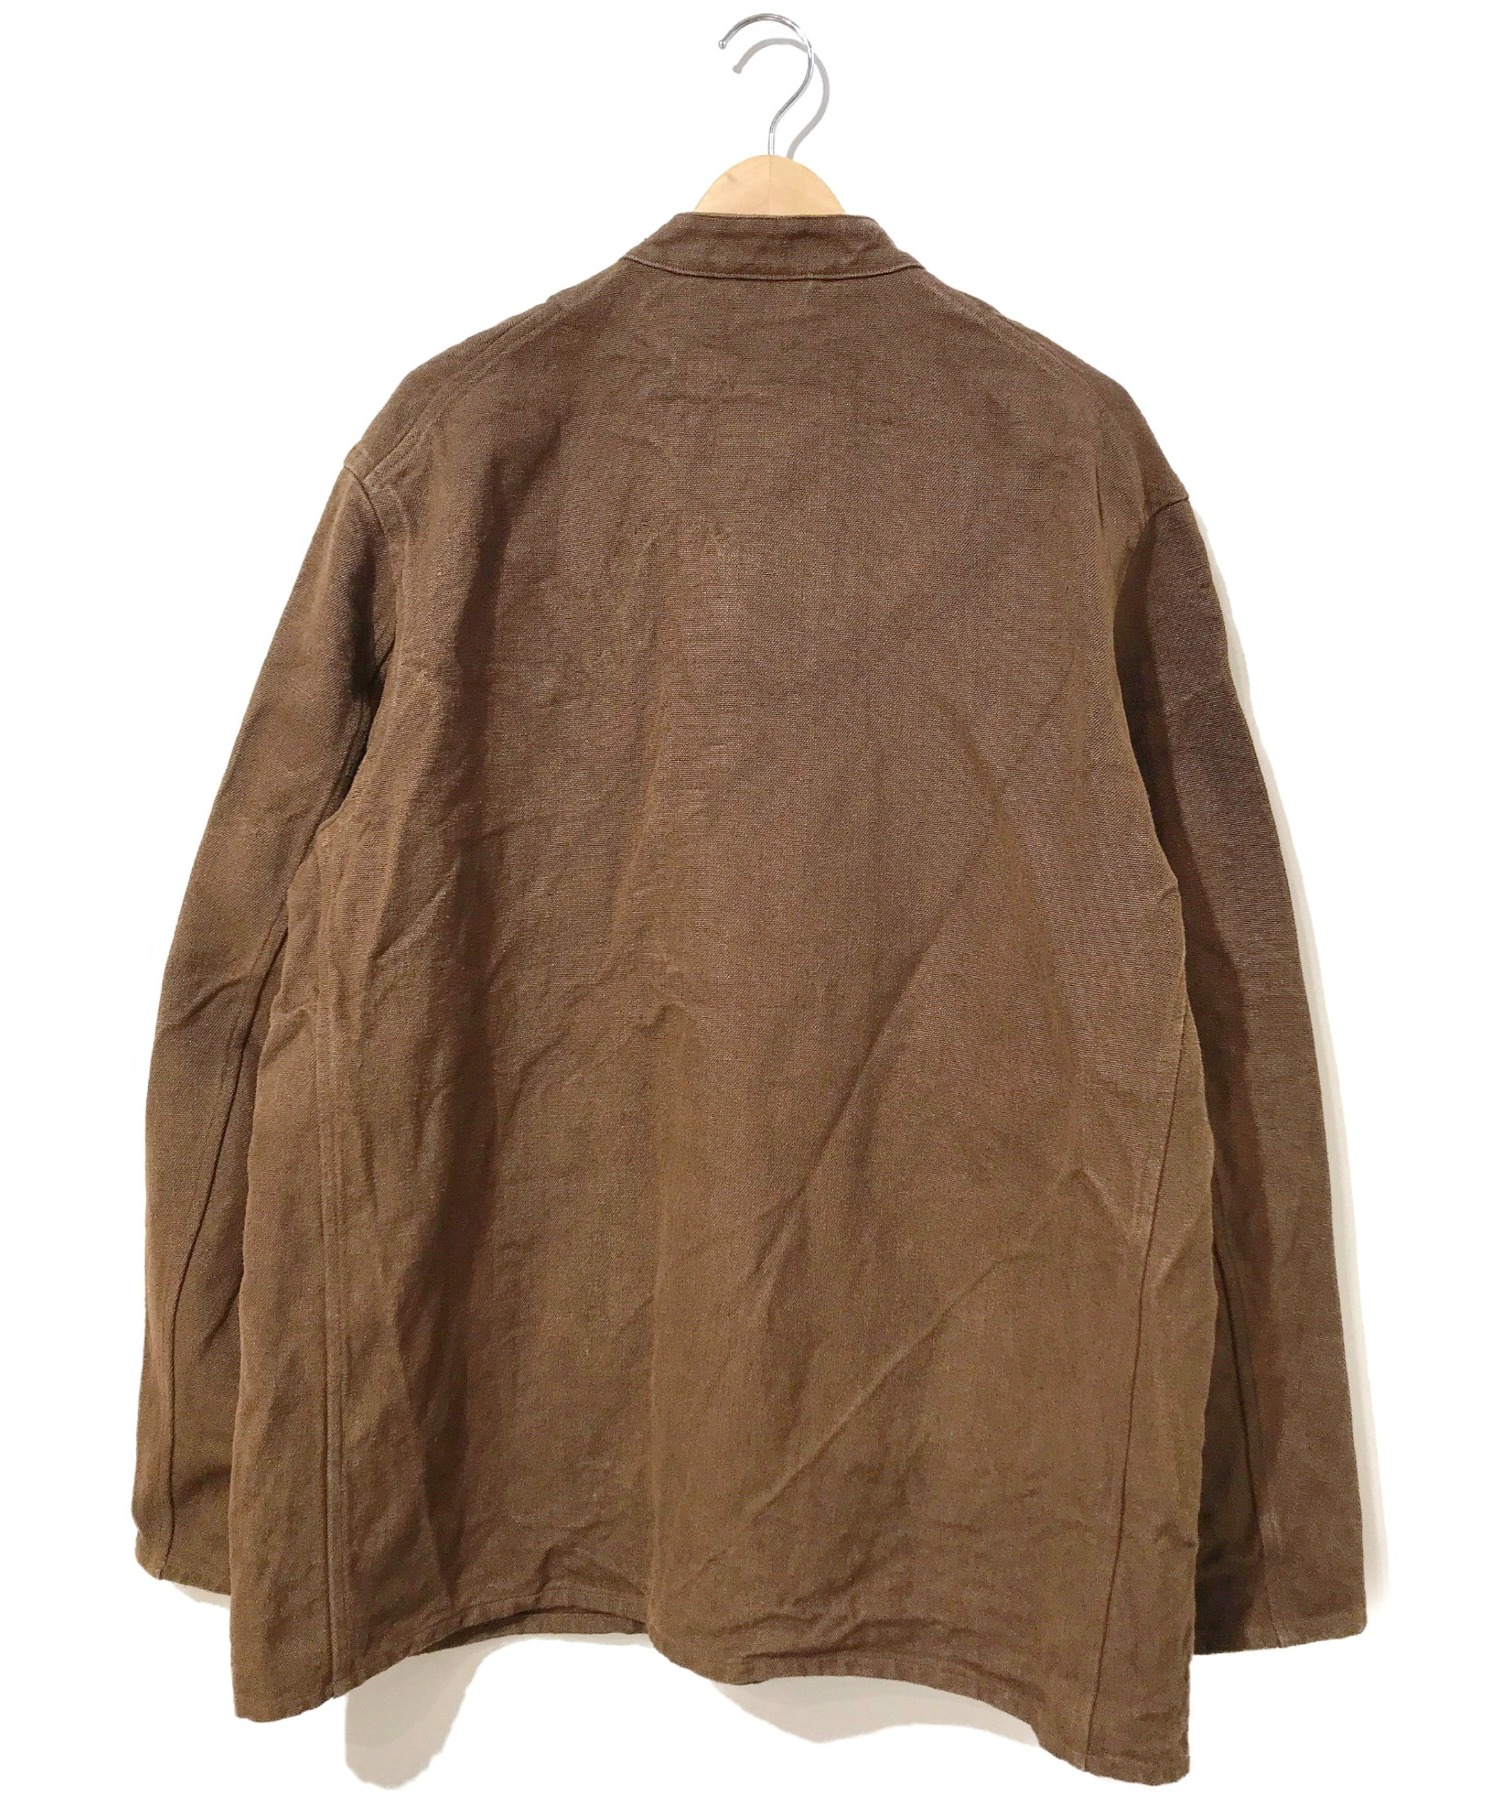 COMOLI (コモリ) ヘンプダックスタンドカラージャケット ブラウン サイズ:3表記 21SS